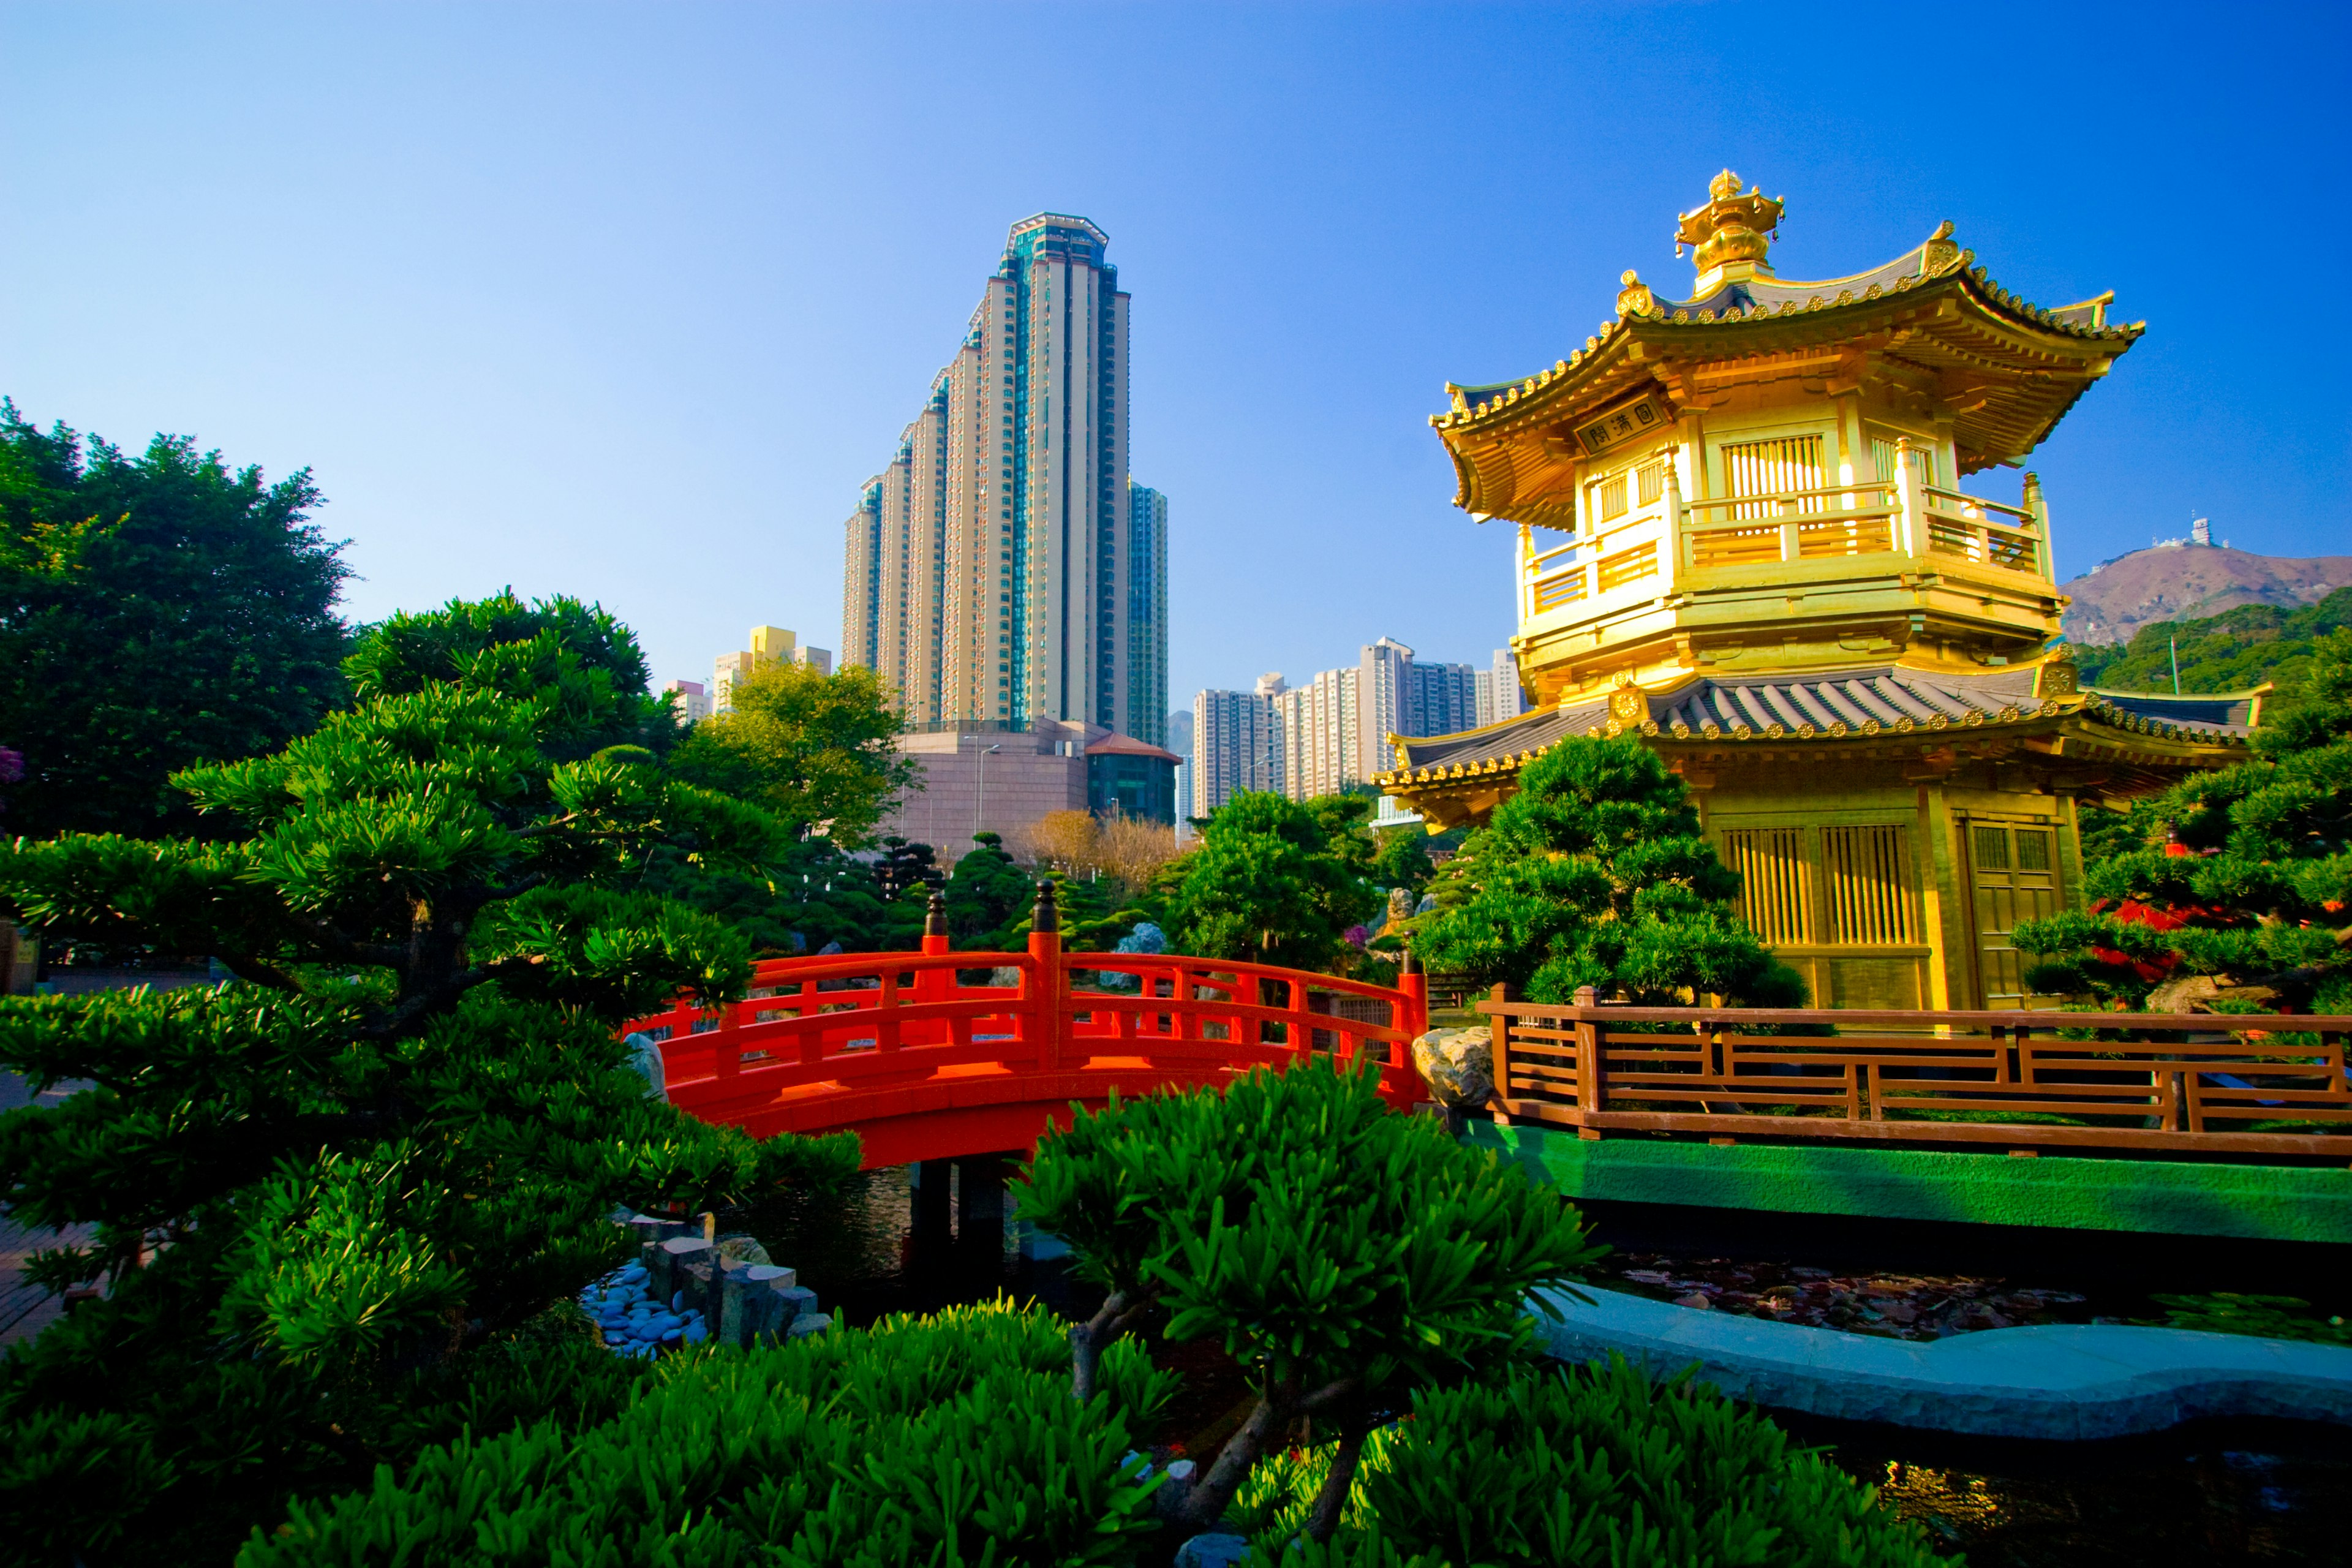 A skyscraper rises above the golden pagoda of Chi Lin Nunnery © Yupgi / Shutterstock